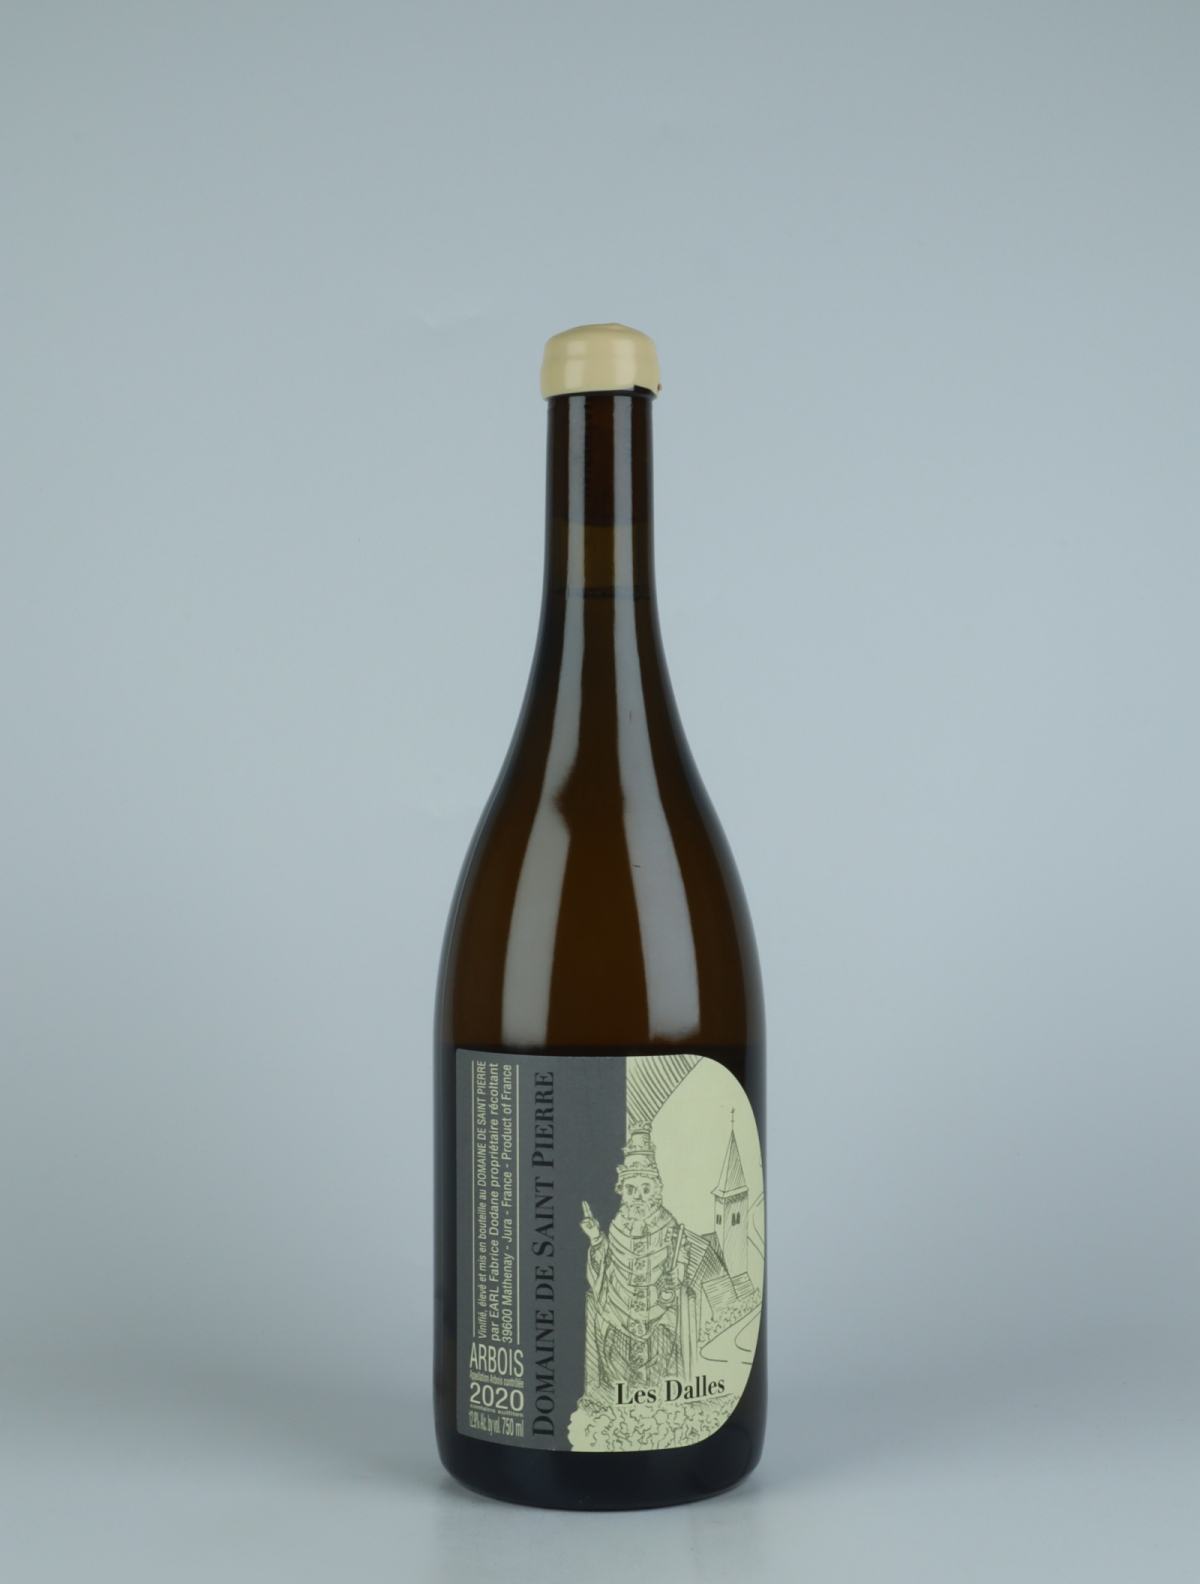 En flaske 2020 Arbois Blanc - Les Dalles Hvidvin fra Domaine de Saint Pierre, Jura i Frankrig